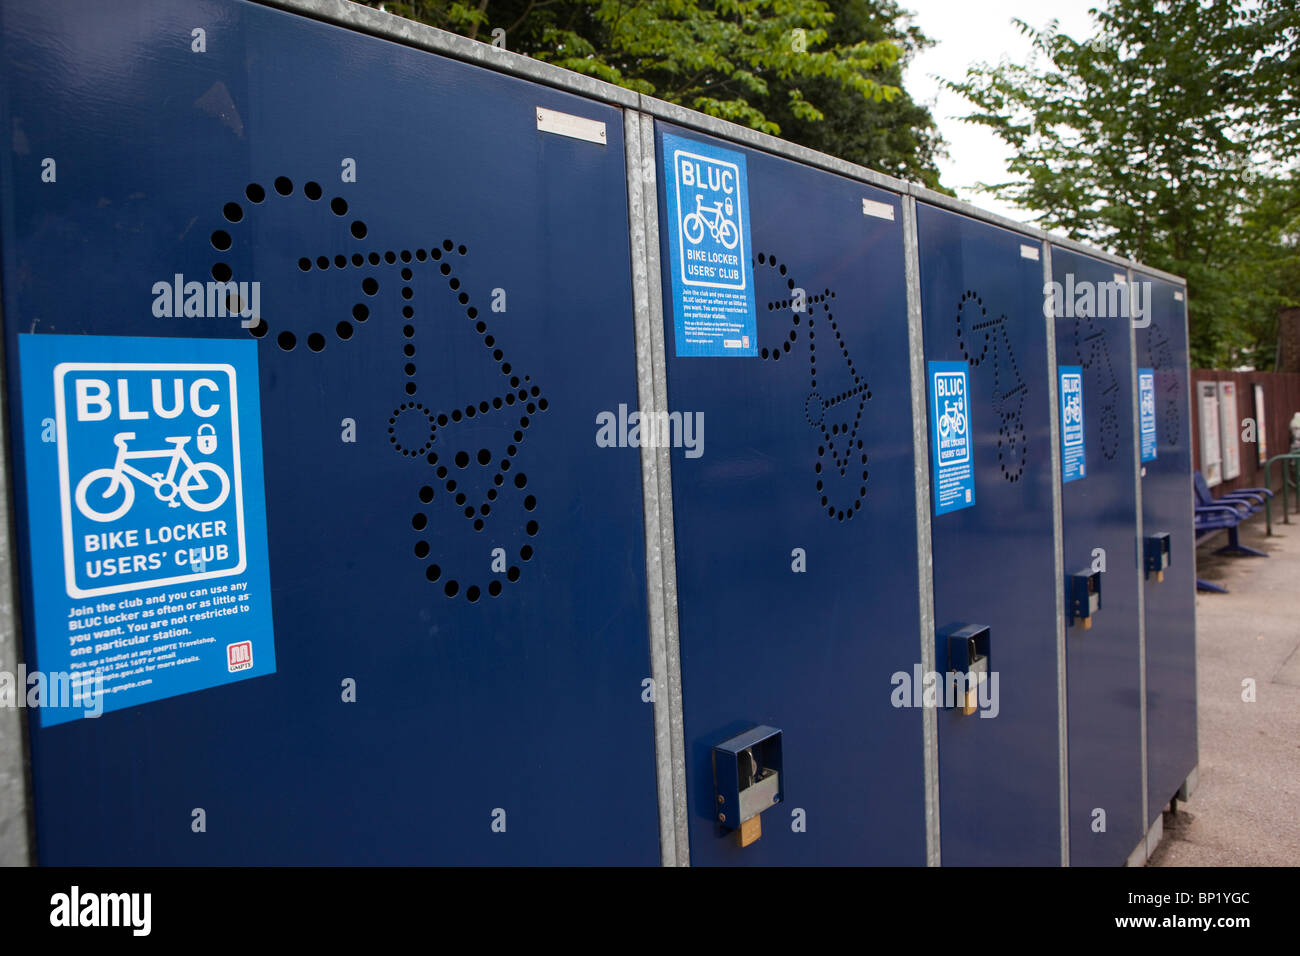 UK, England, Cheshire, Marple, Railway Station, Bike Locker User’s Club, bicycle lockers on platform Stock Photo